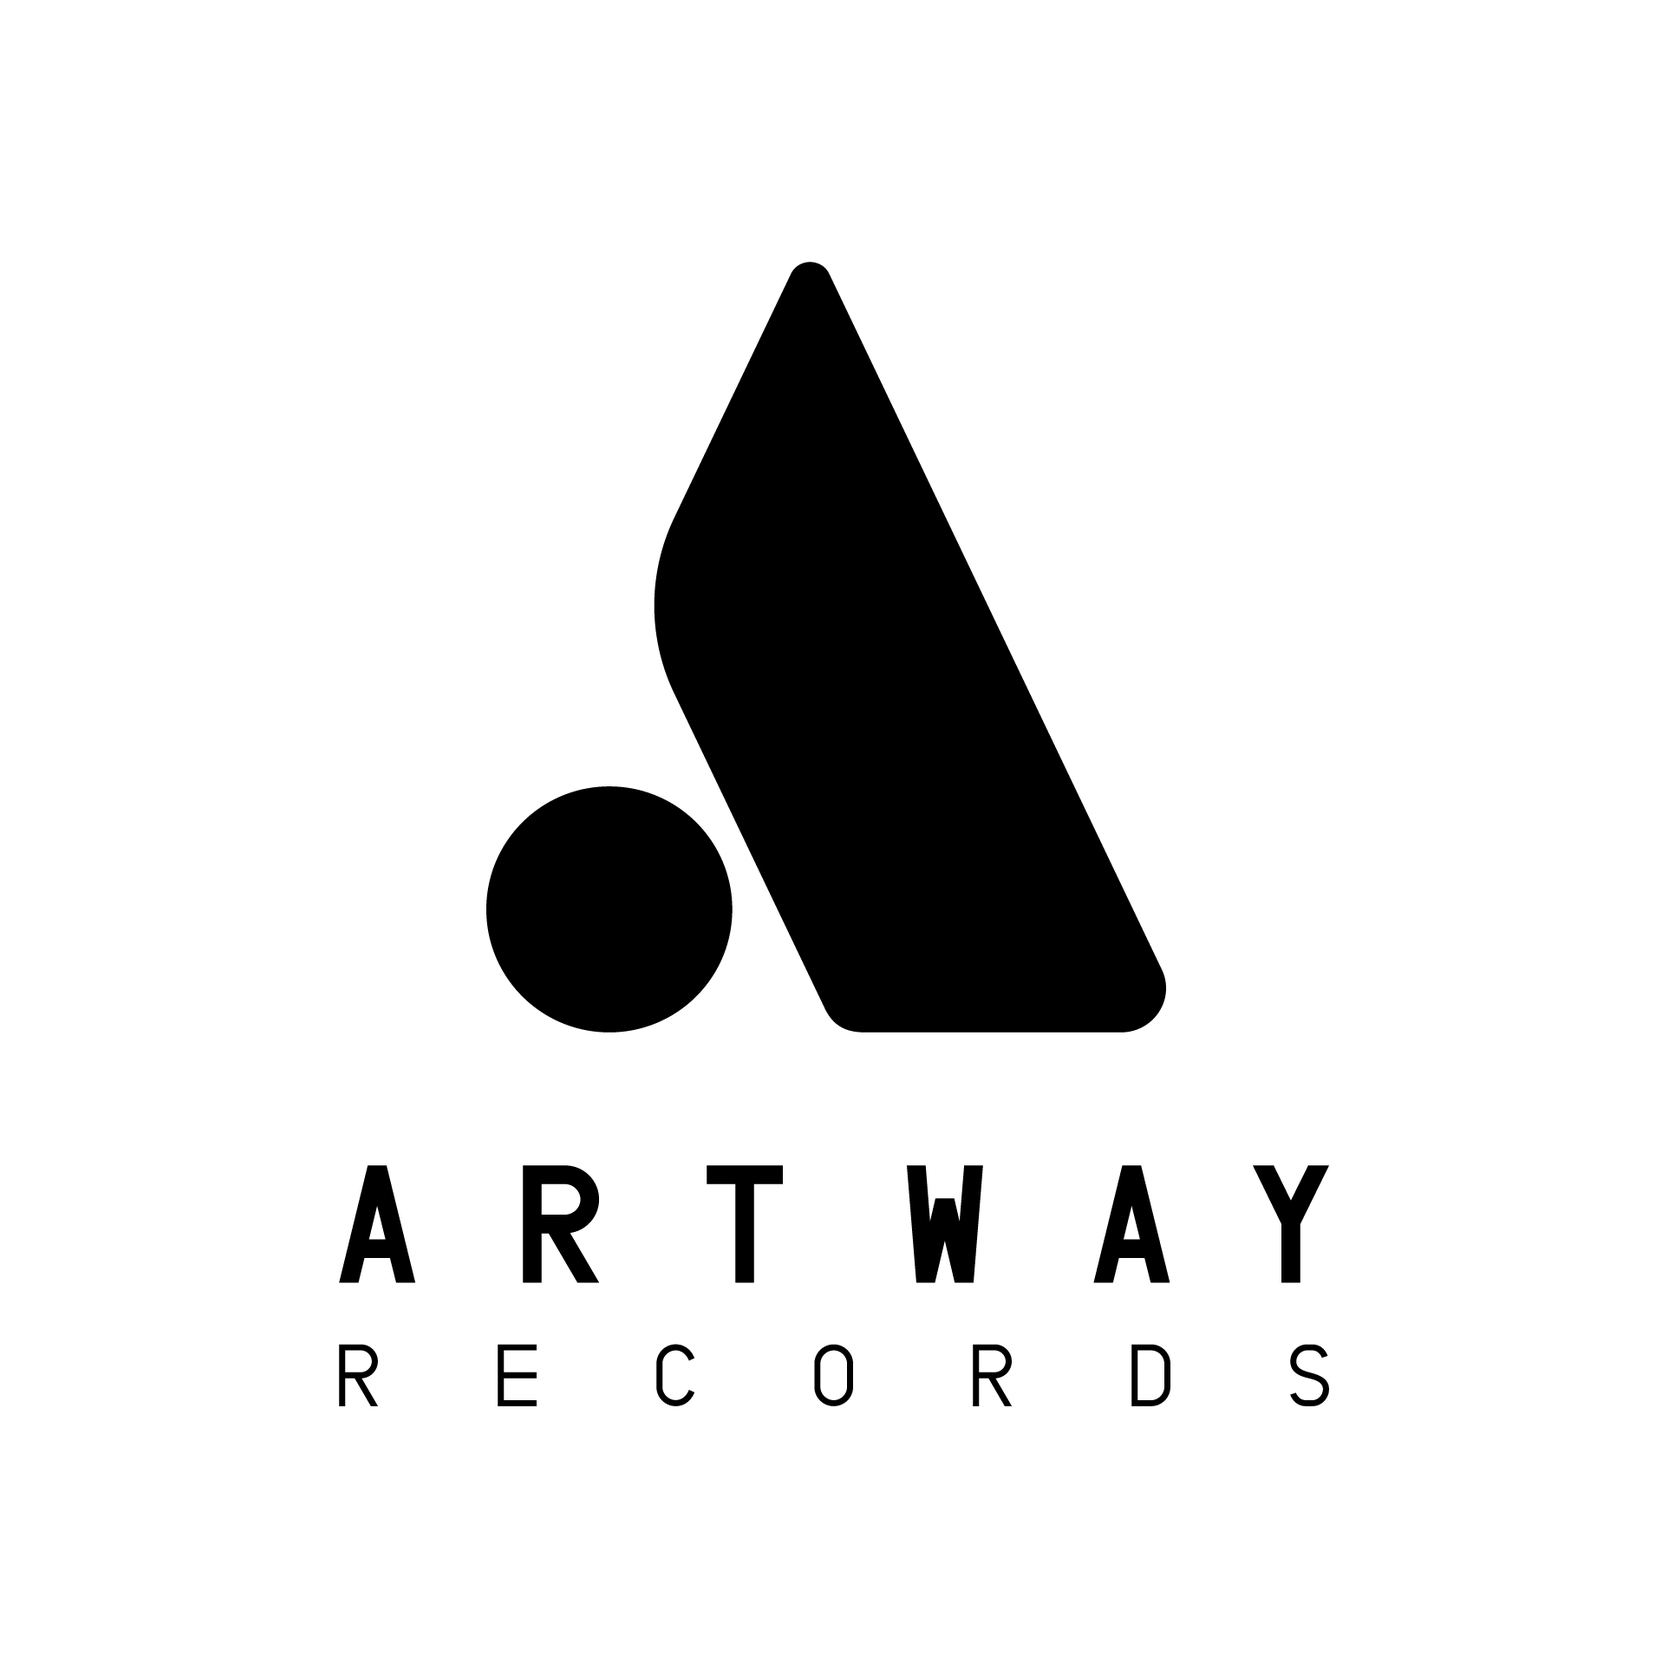 http://artway.pt/records.html